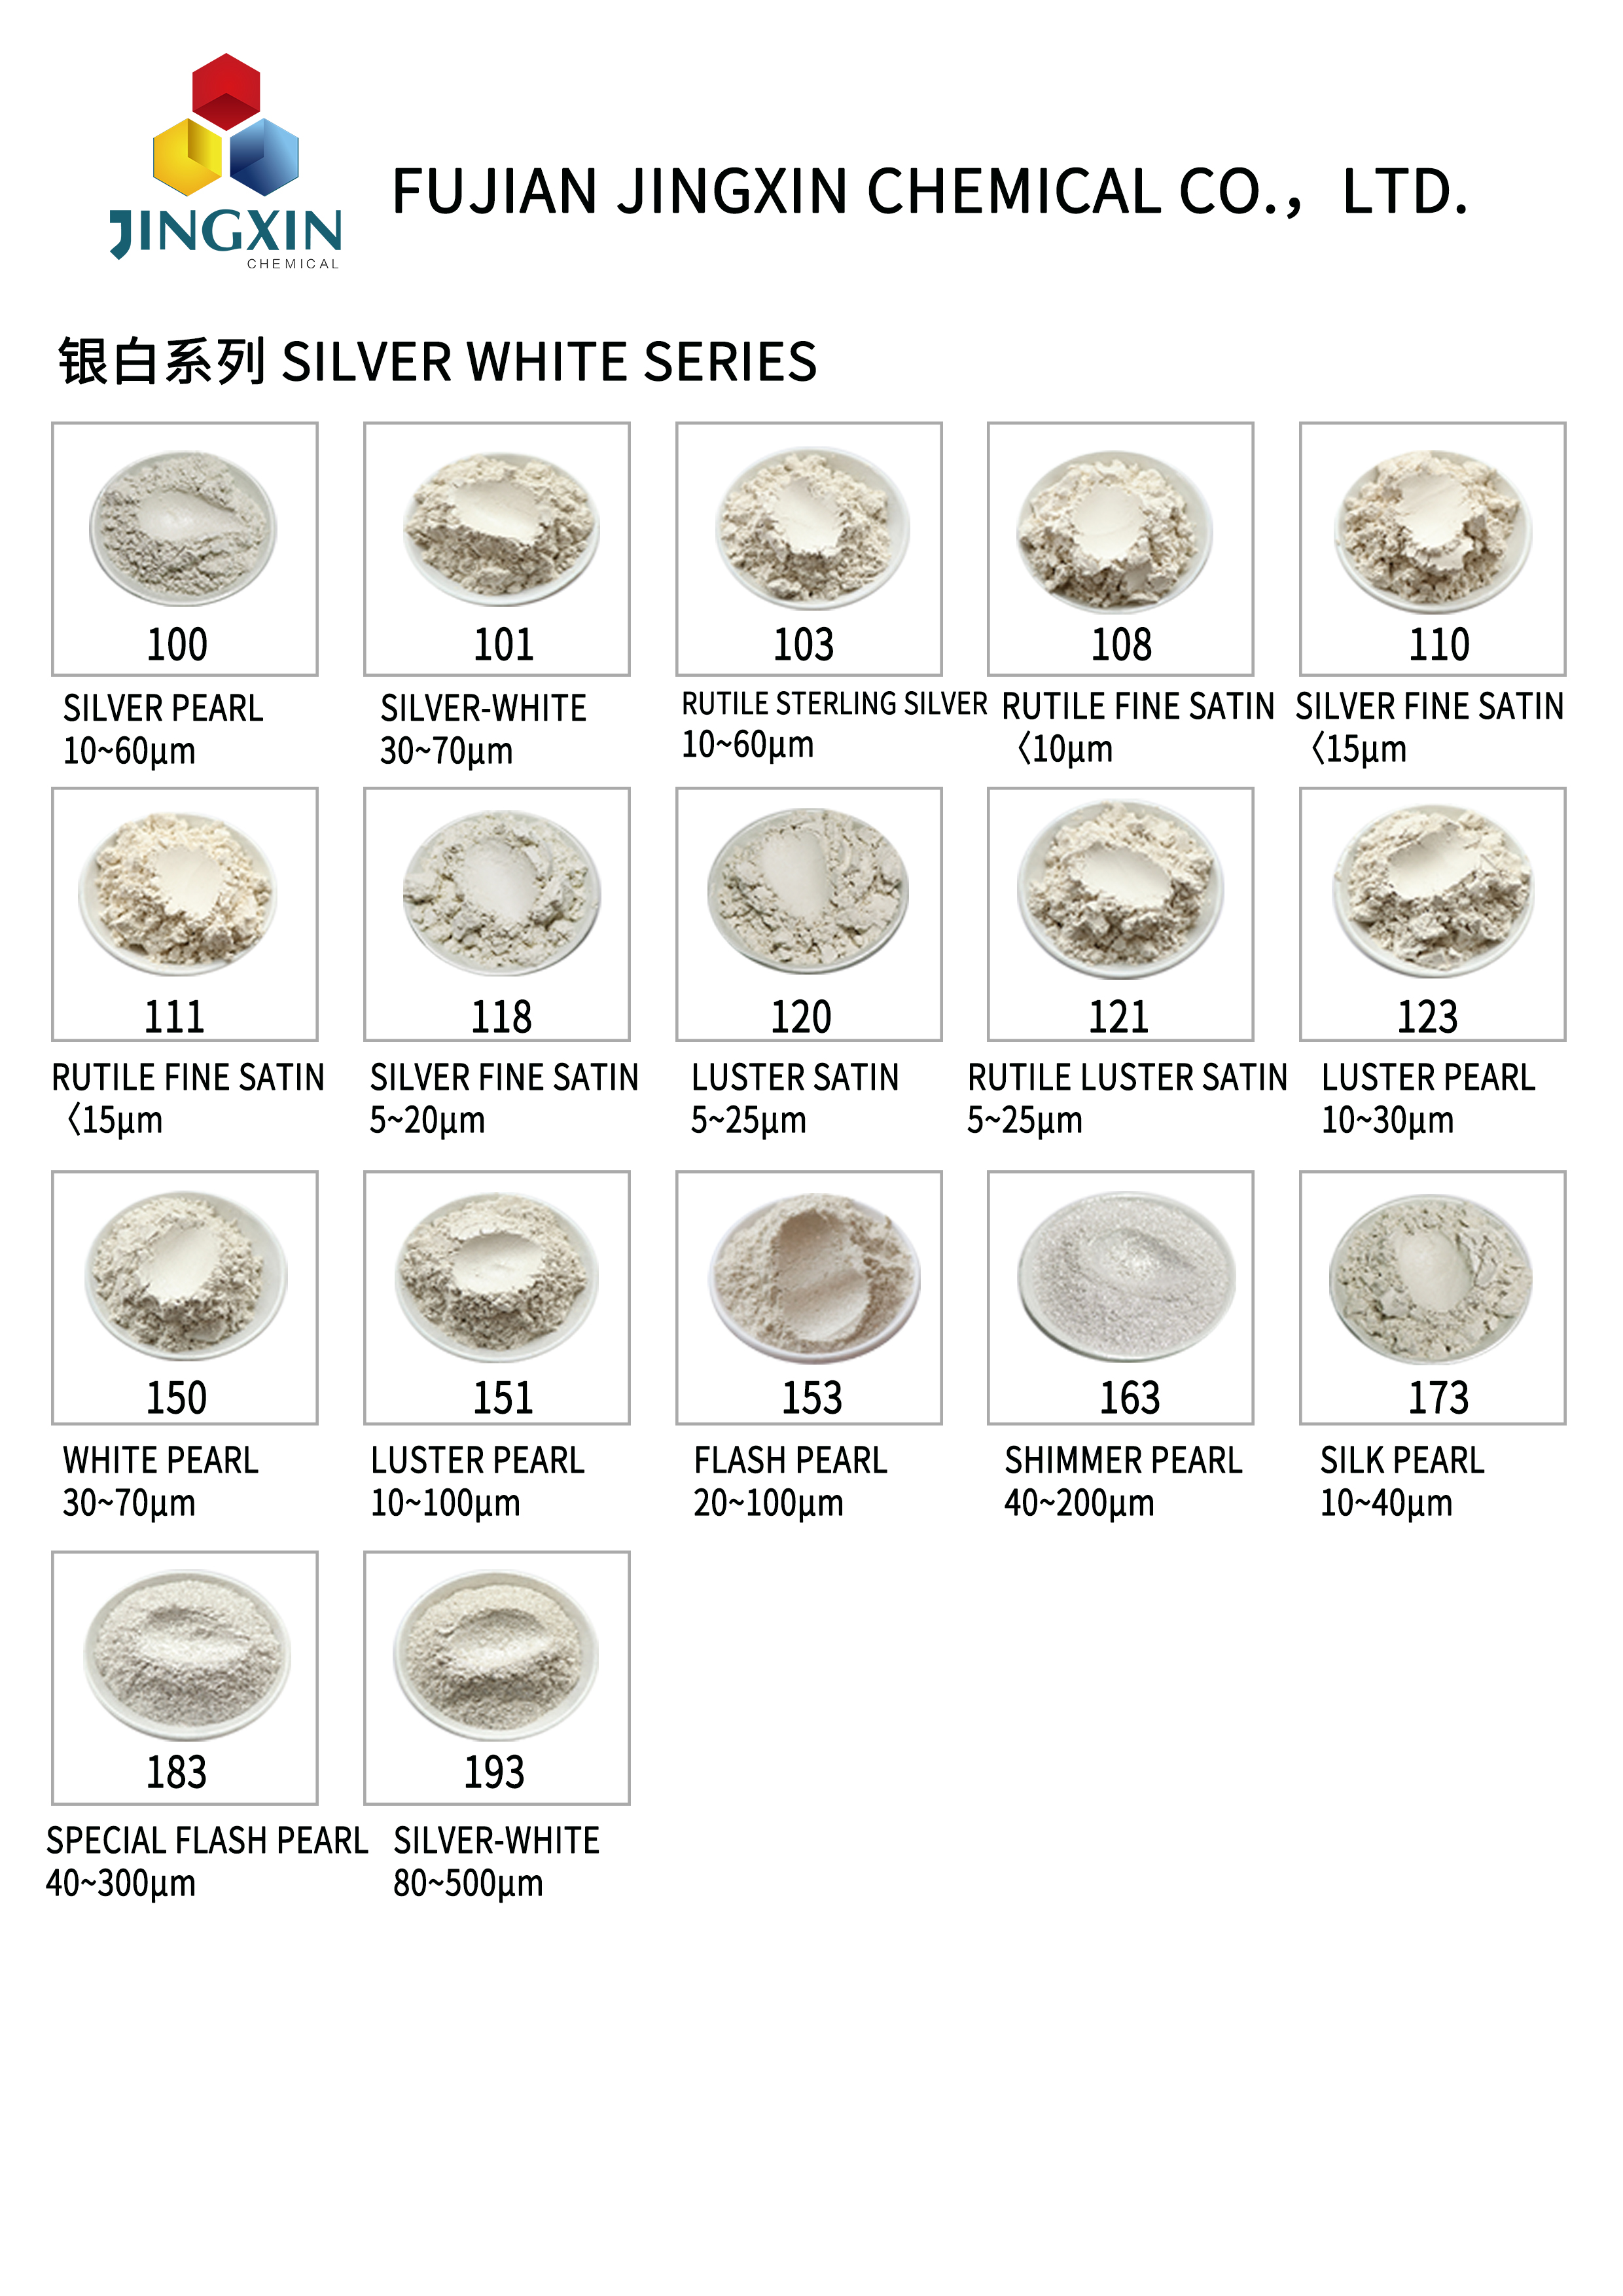 silver white series (7)